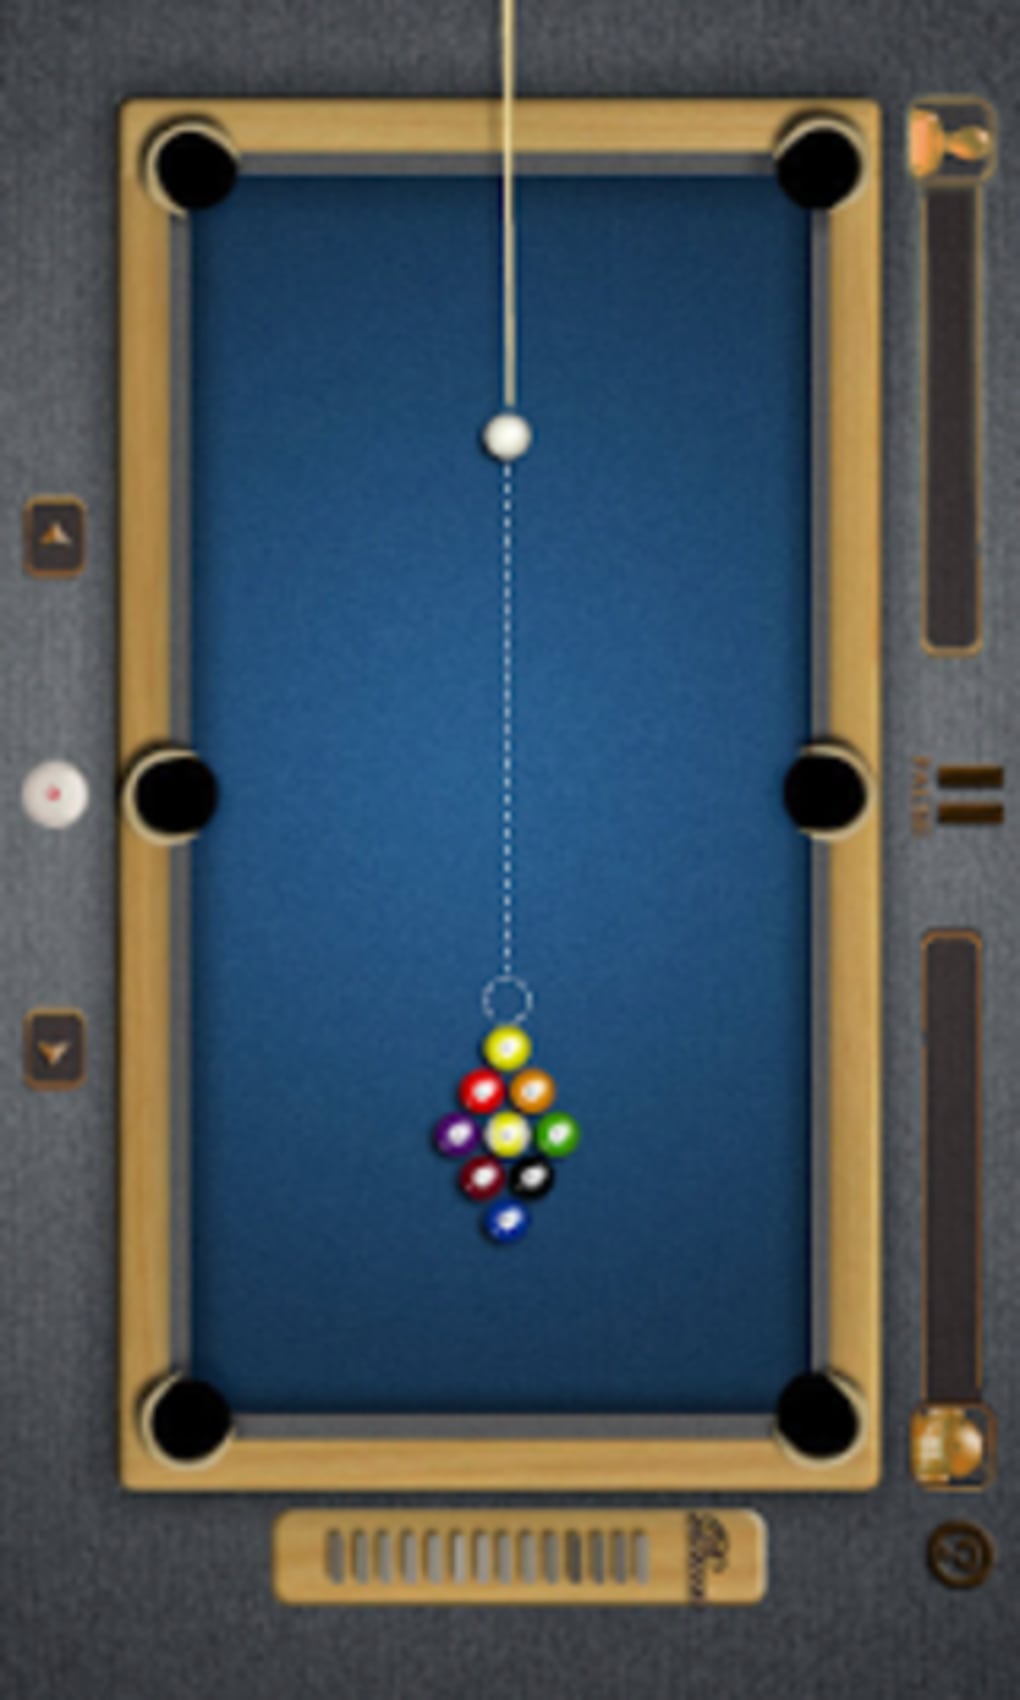 pool master game online free play